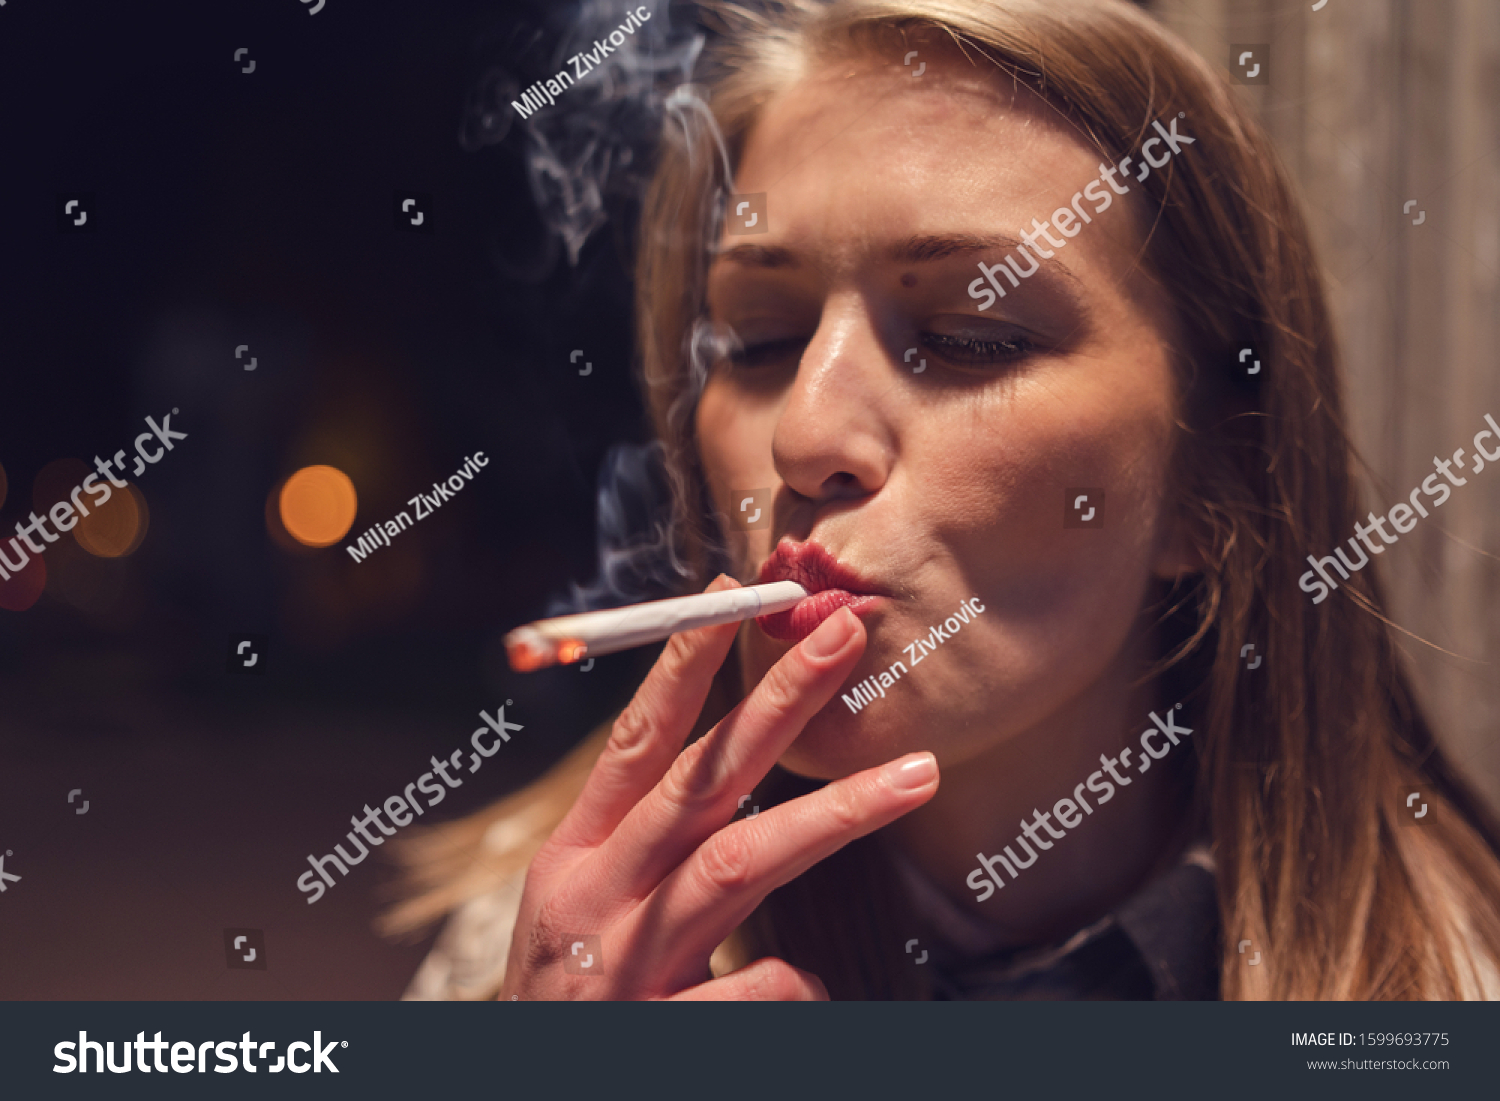 News anchors who smoke cigarettes